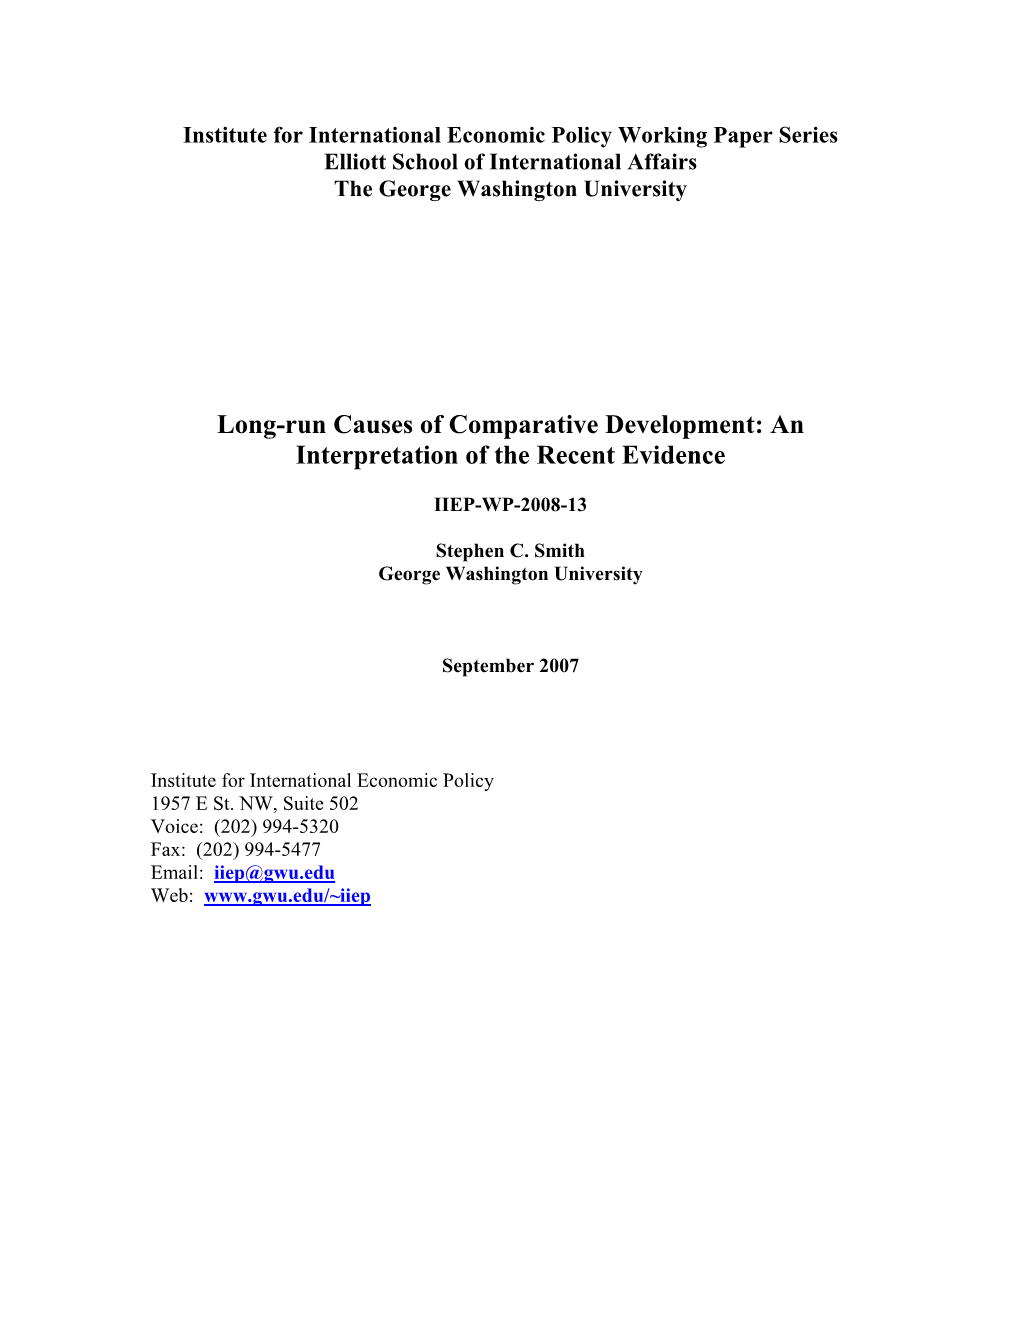 Long-Run Causes of Comparative Development: an Interpretation of the Recent Evidence